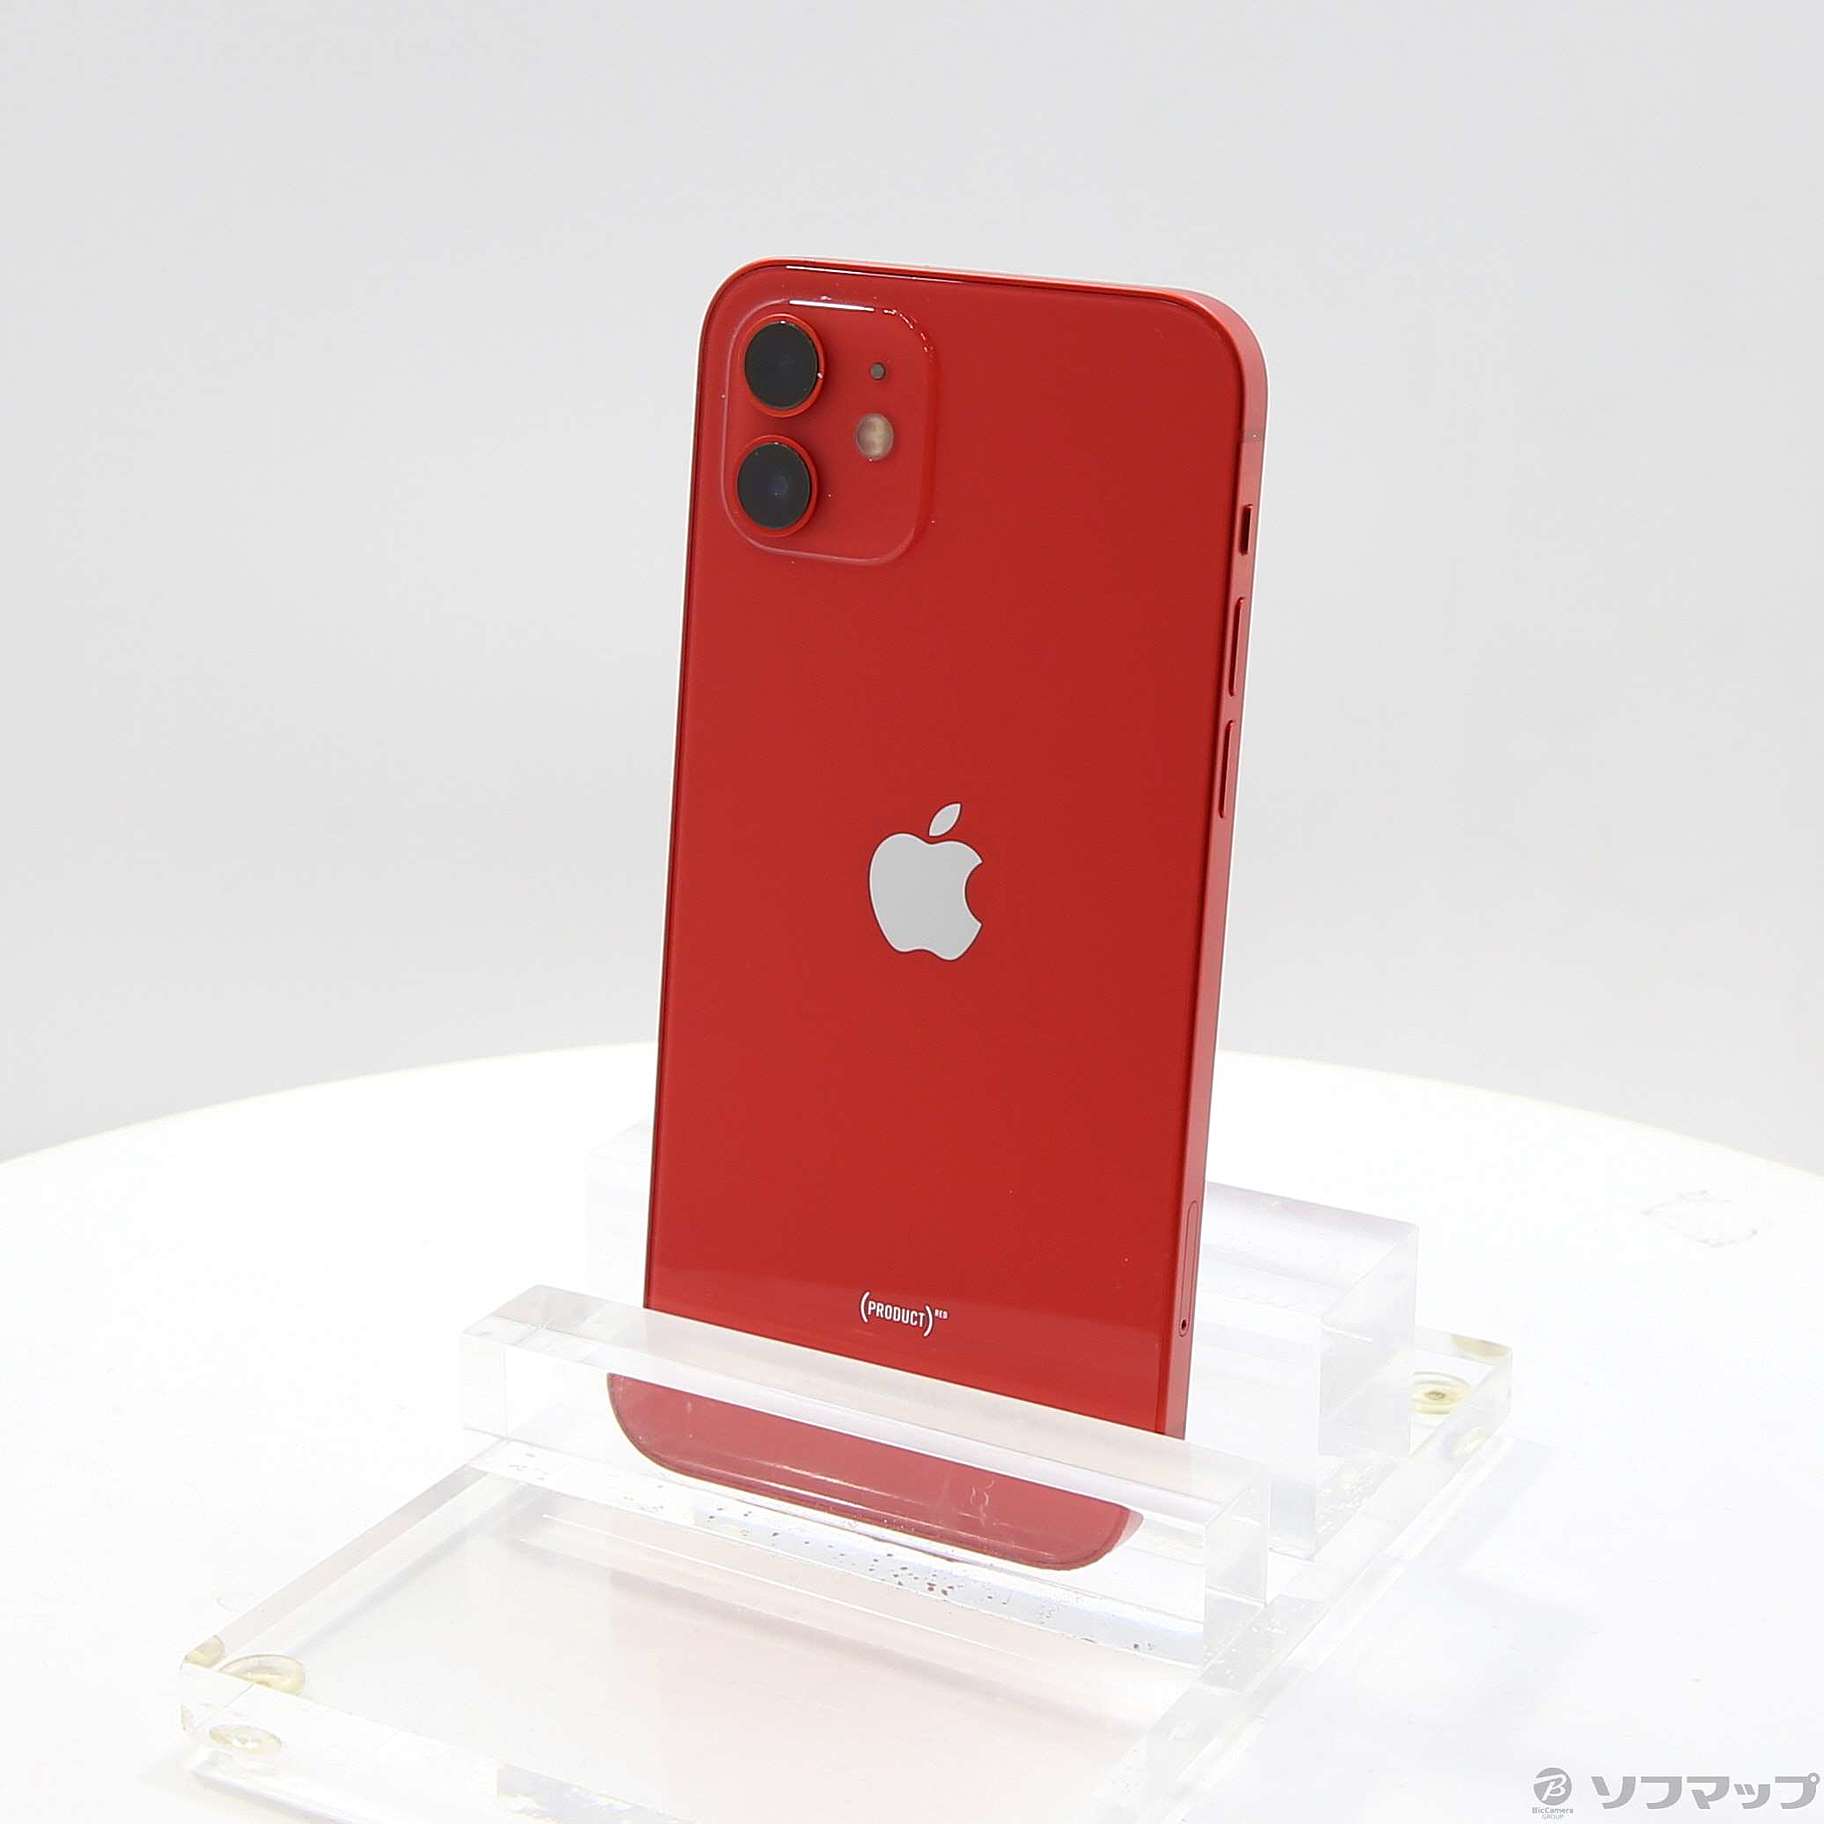 iPhone 12 (PRODUCT)RED 64GB SIMフリー [レッド] 中古(白ロム)価格